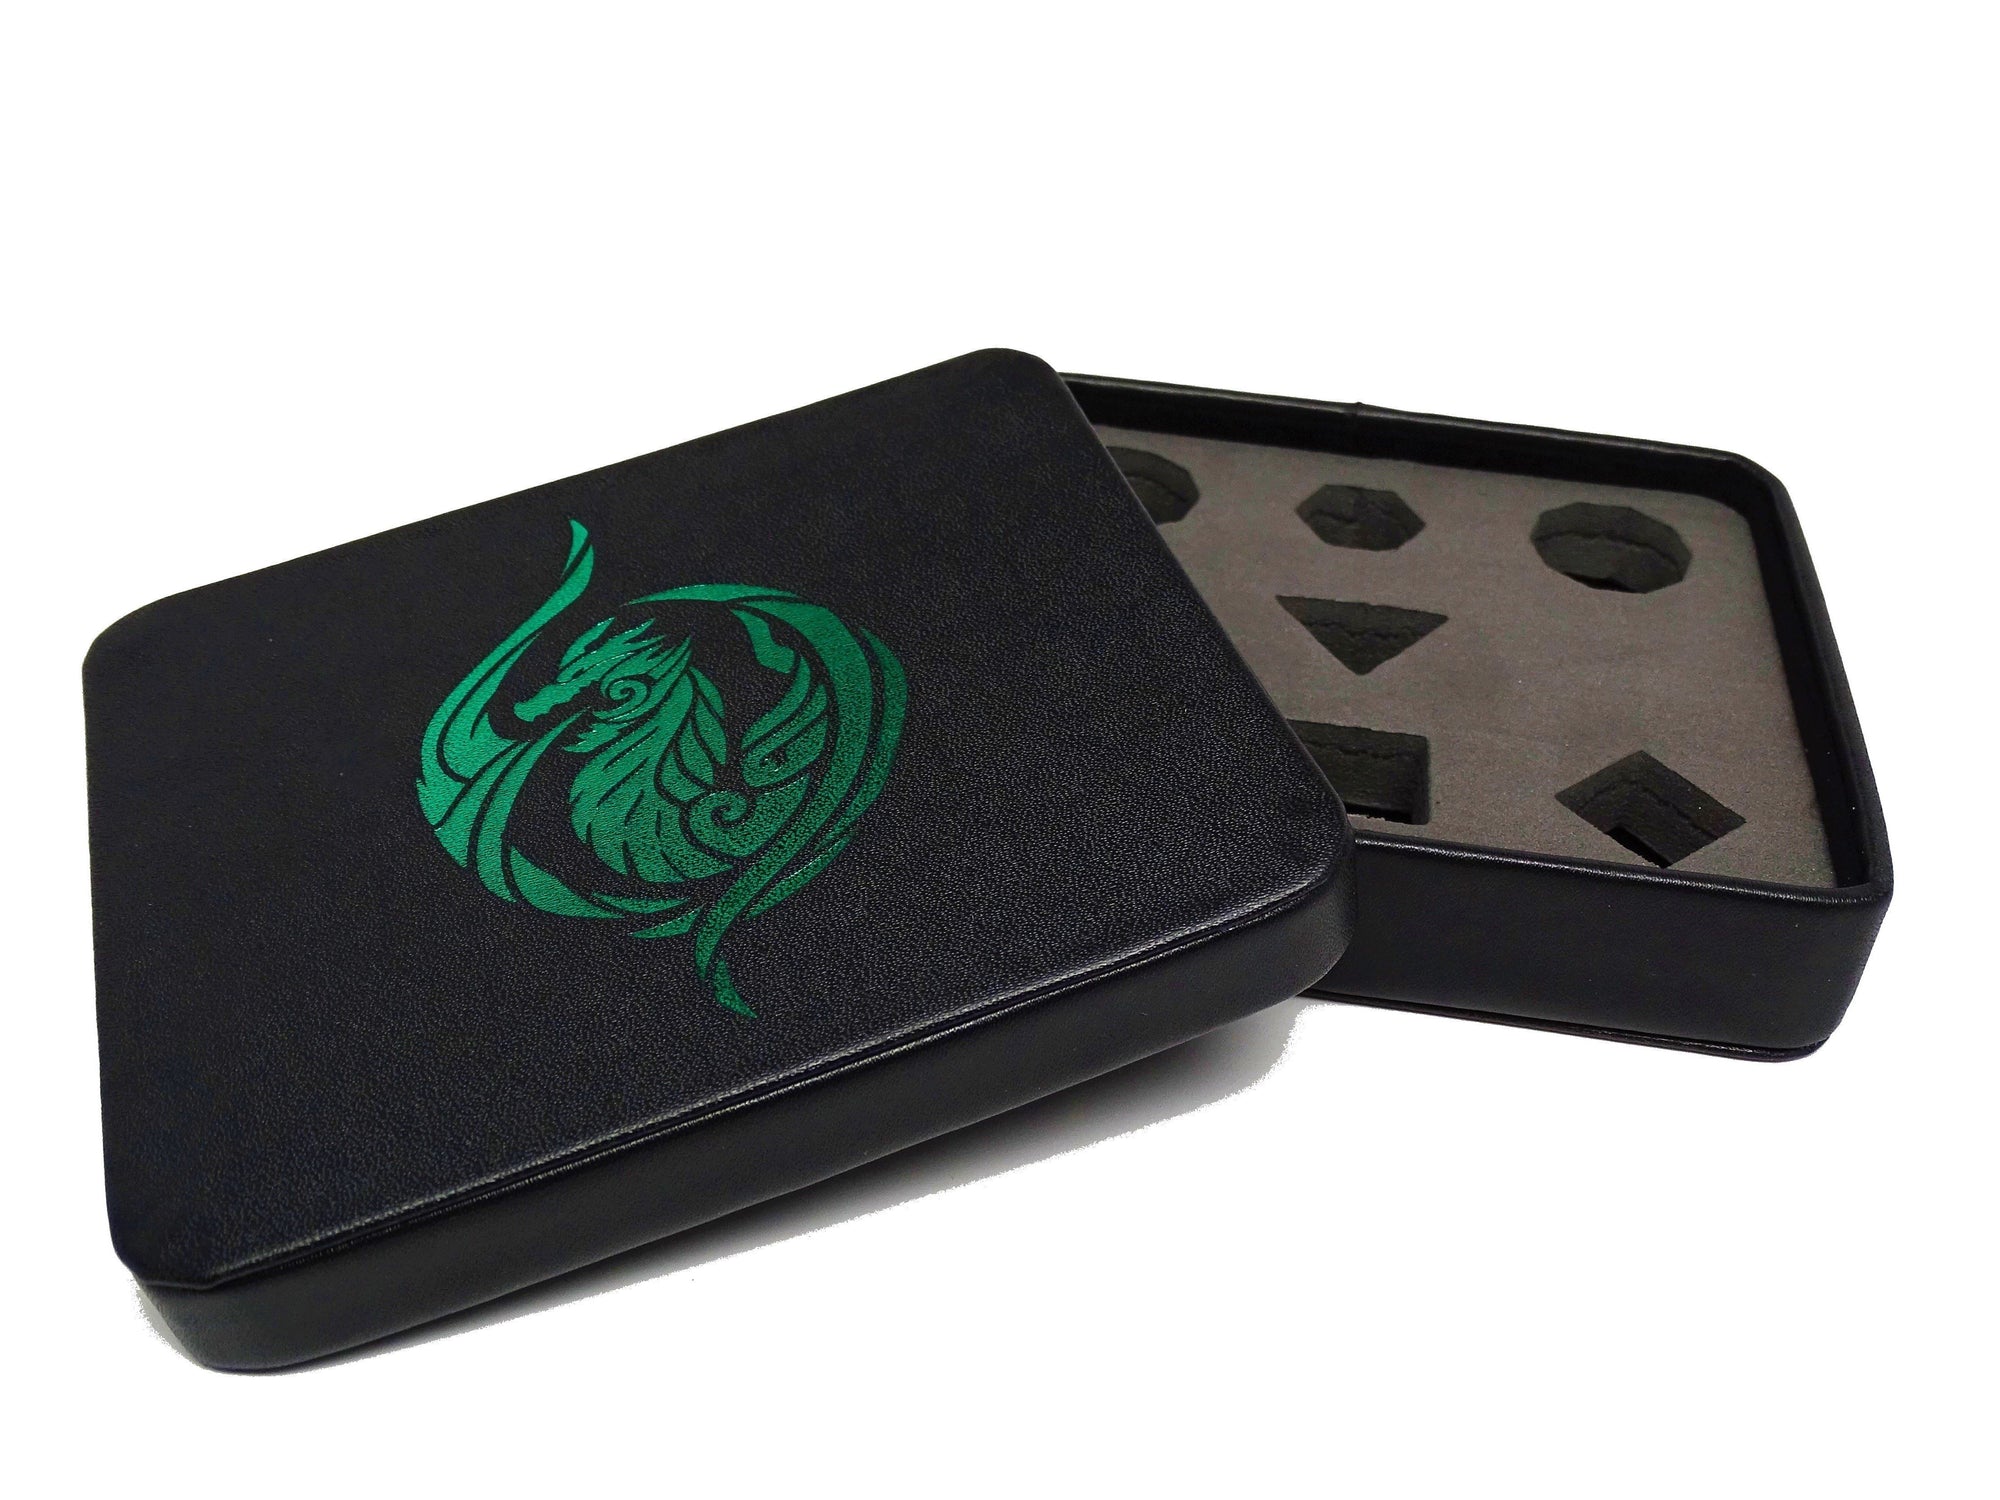 Dice Display and Storage Case - Green Dragon's Breath Design